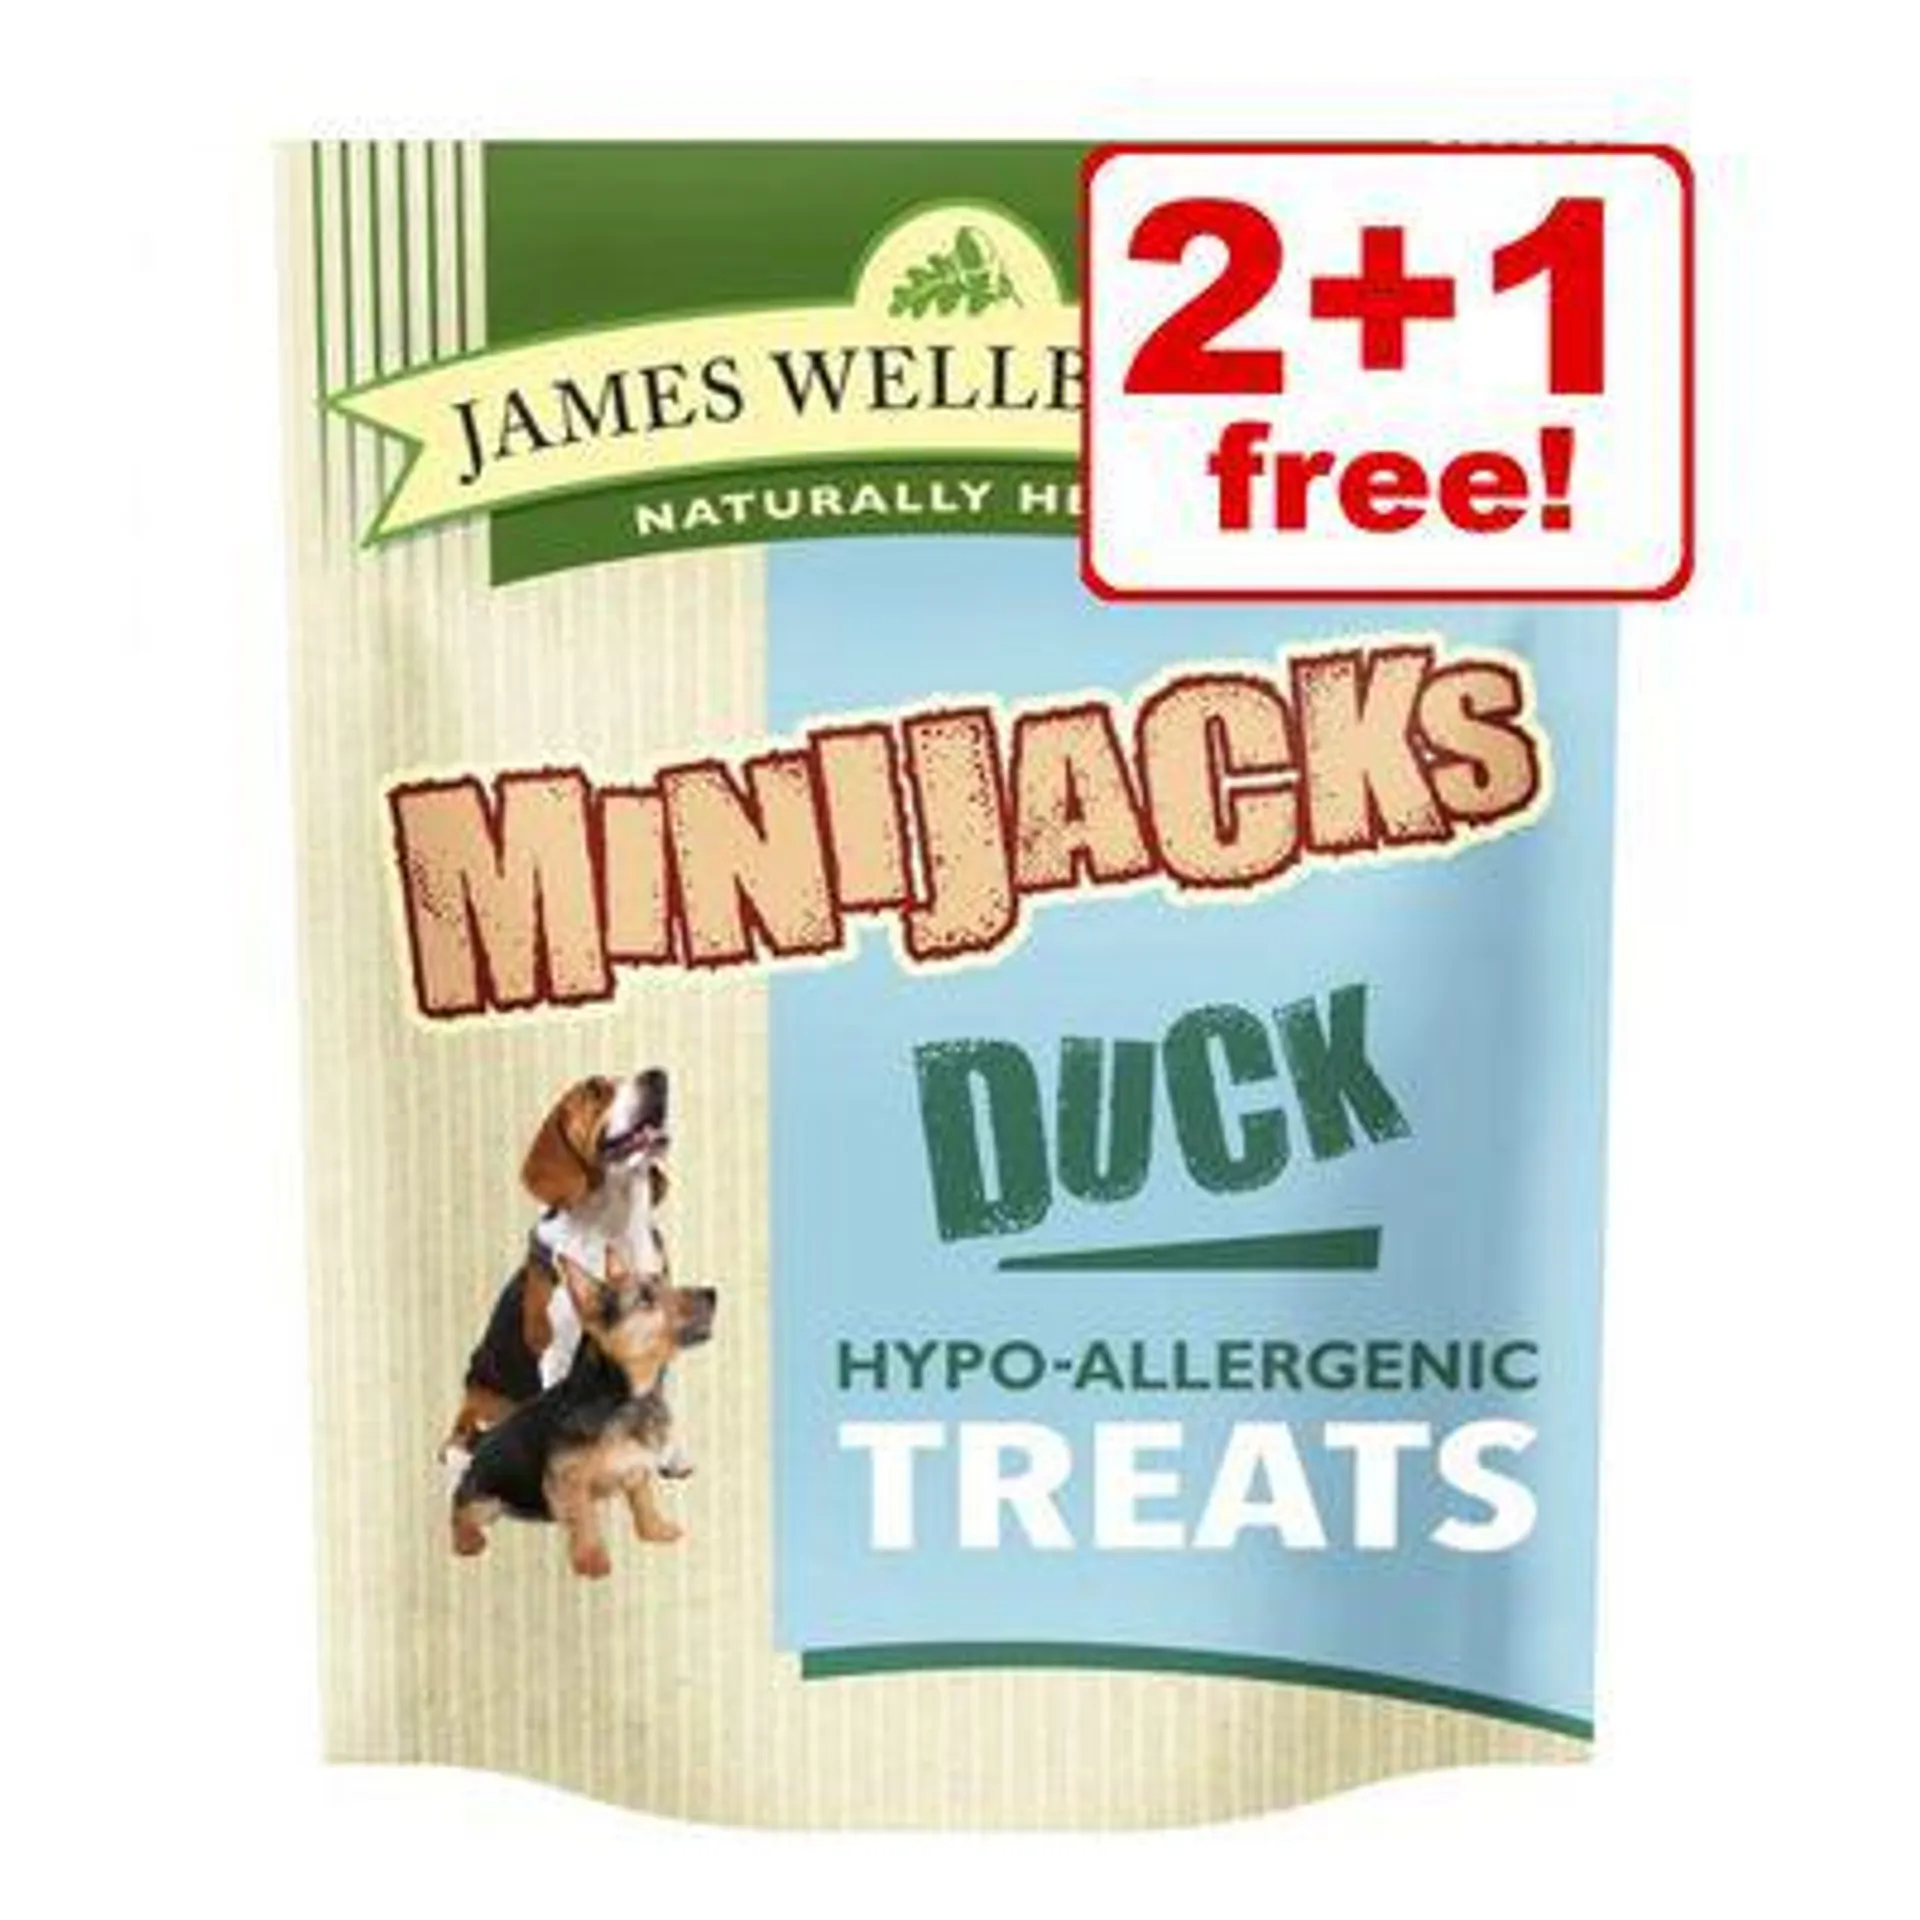 3 x James Wellbeloved Dog Treats - 2 + 1 Free!*